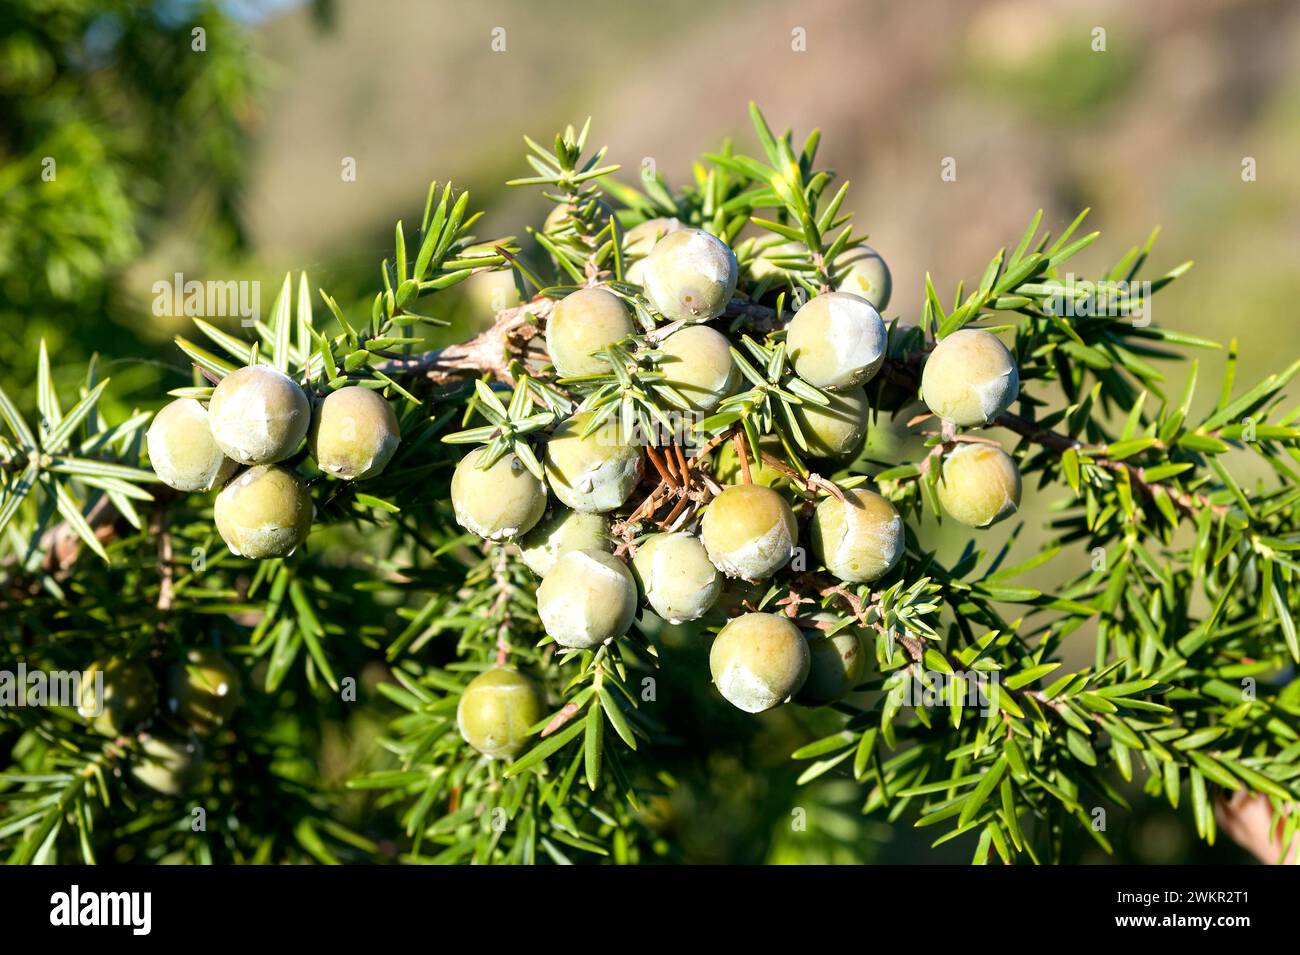 Cade juniper or prickly juniper (Juniperus oxycedrus) is an evergreen coniferous shrub native to Mediterranean region. Cones and leaves detail. This p Stock Photo